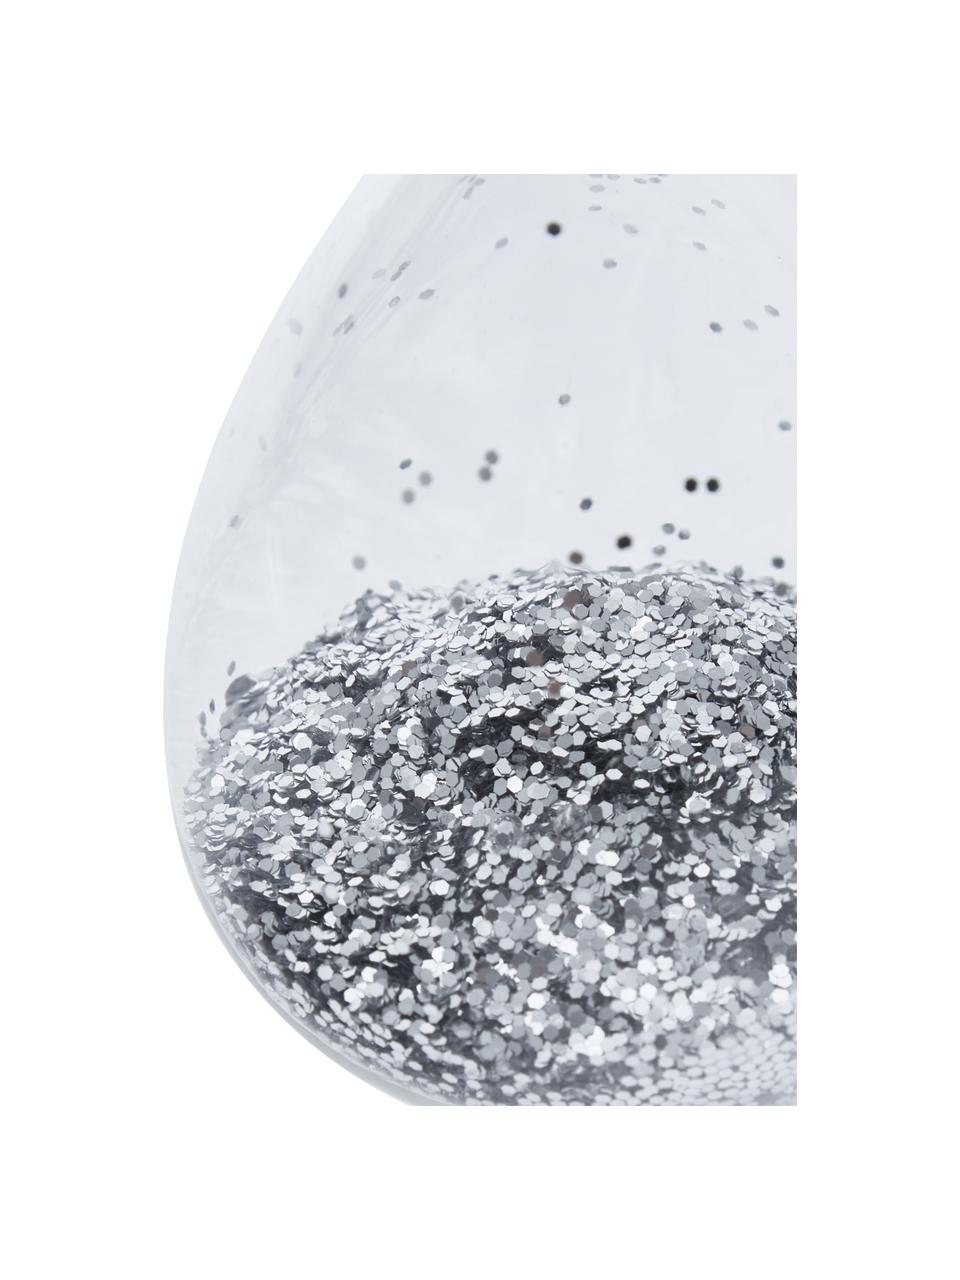 Decoratief object Hourglass, Transparant, zilverkleurig, Ø 7 x H 16 cm